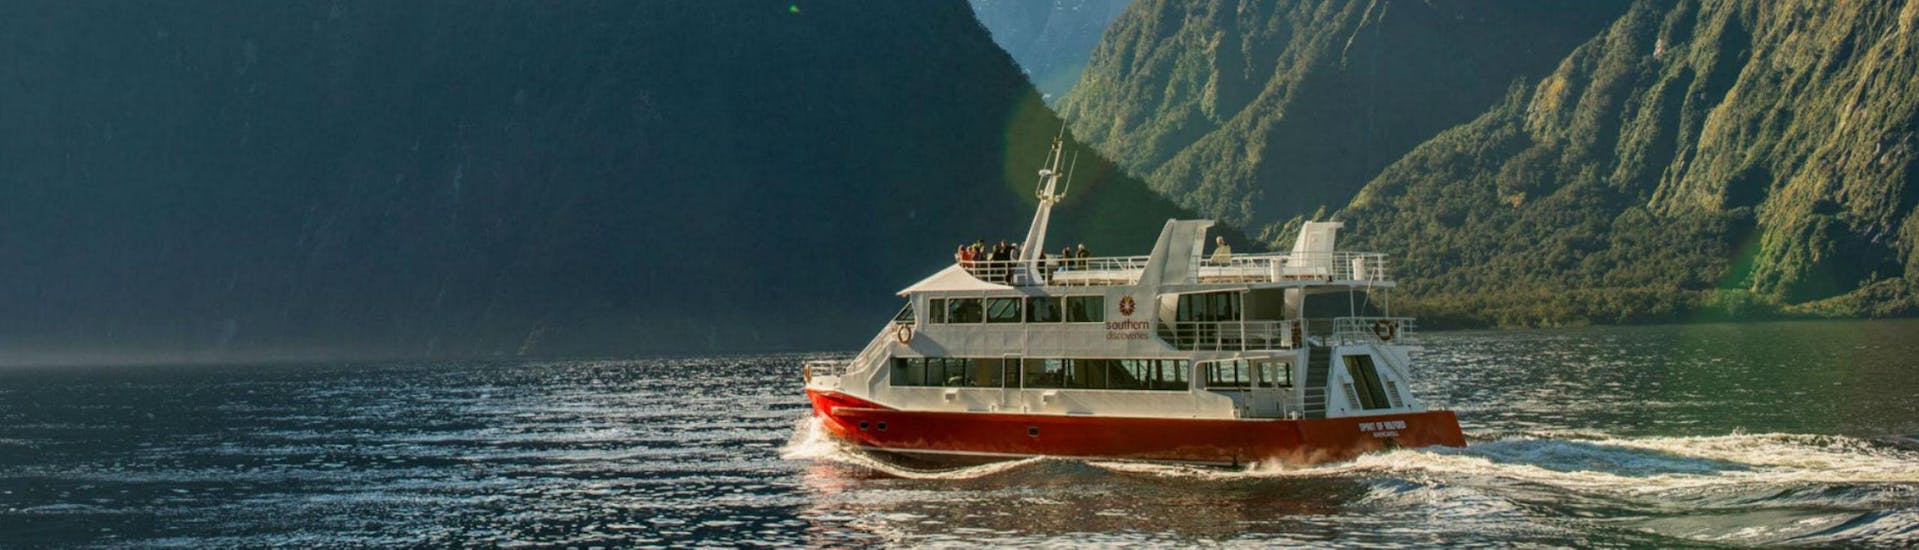 Paseo en barco de Milford Sound a Milford Sound Fjord con avistamiento de fauna.